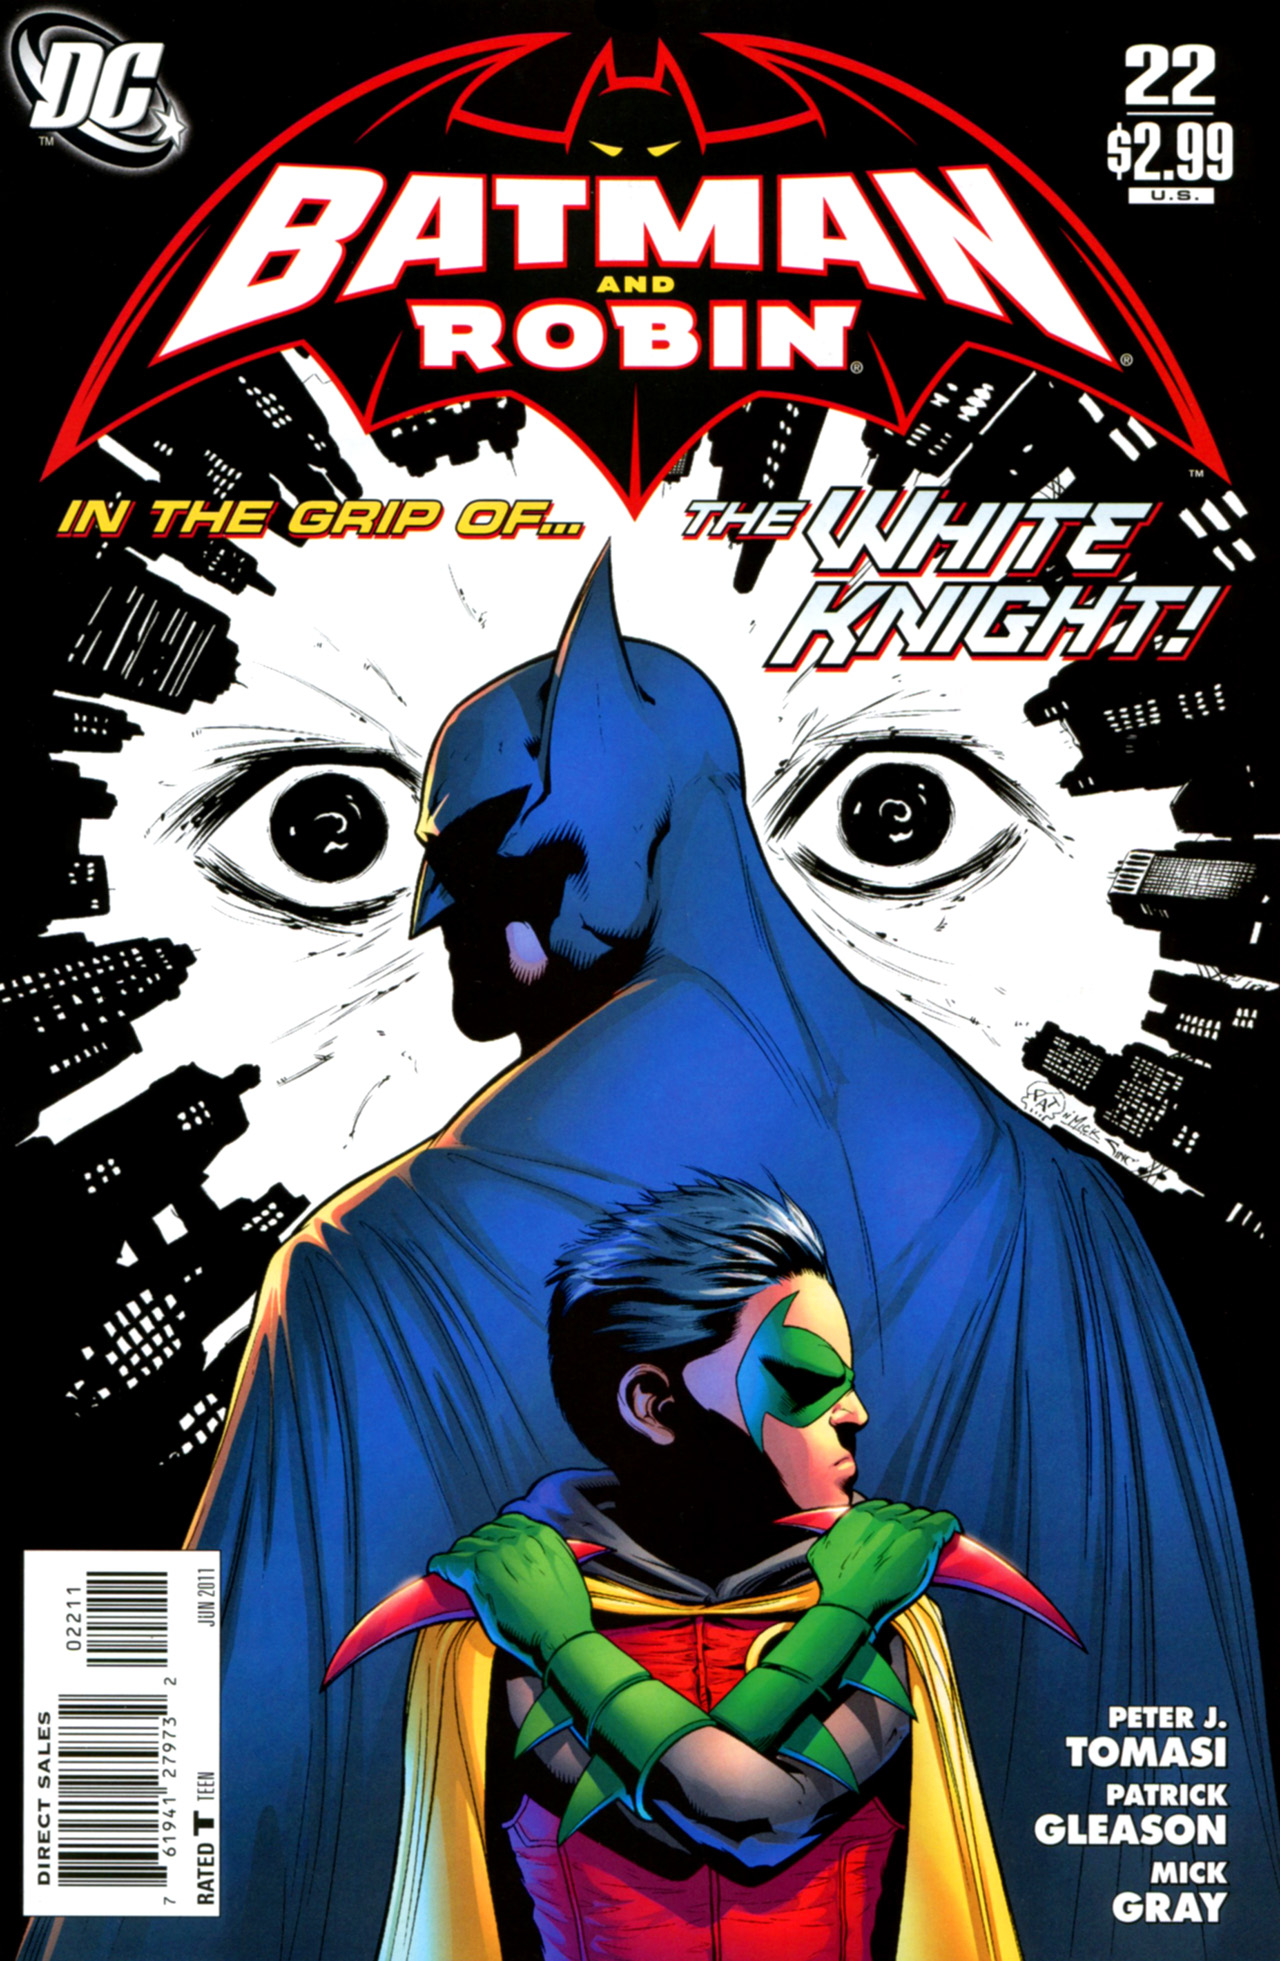 Batman & Robin, Vol. 1 by Grant Morrison